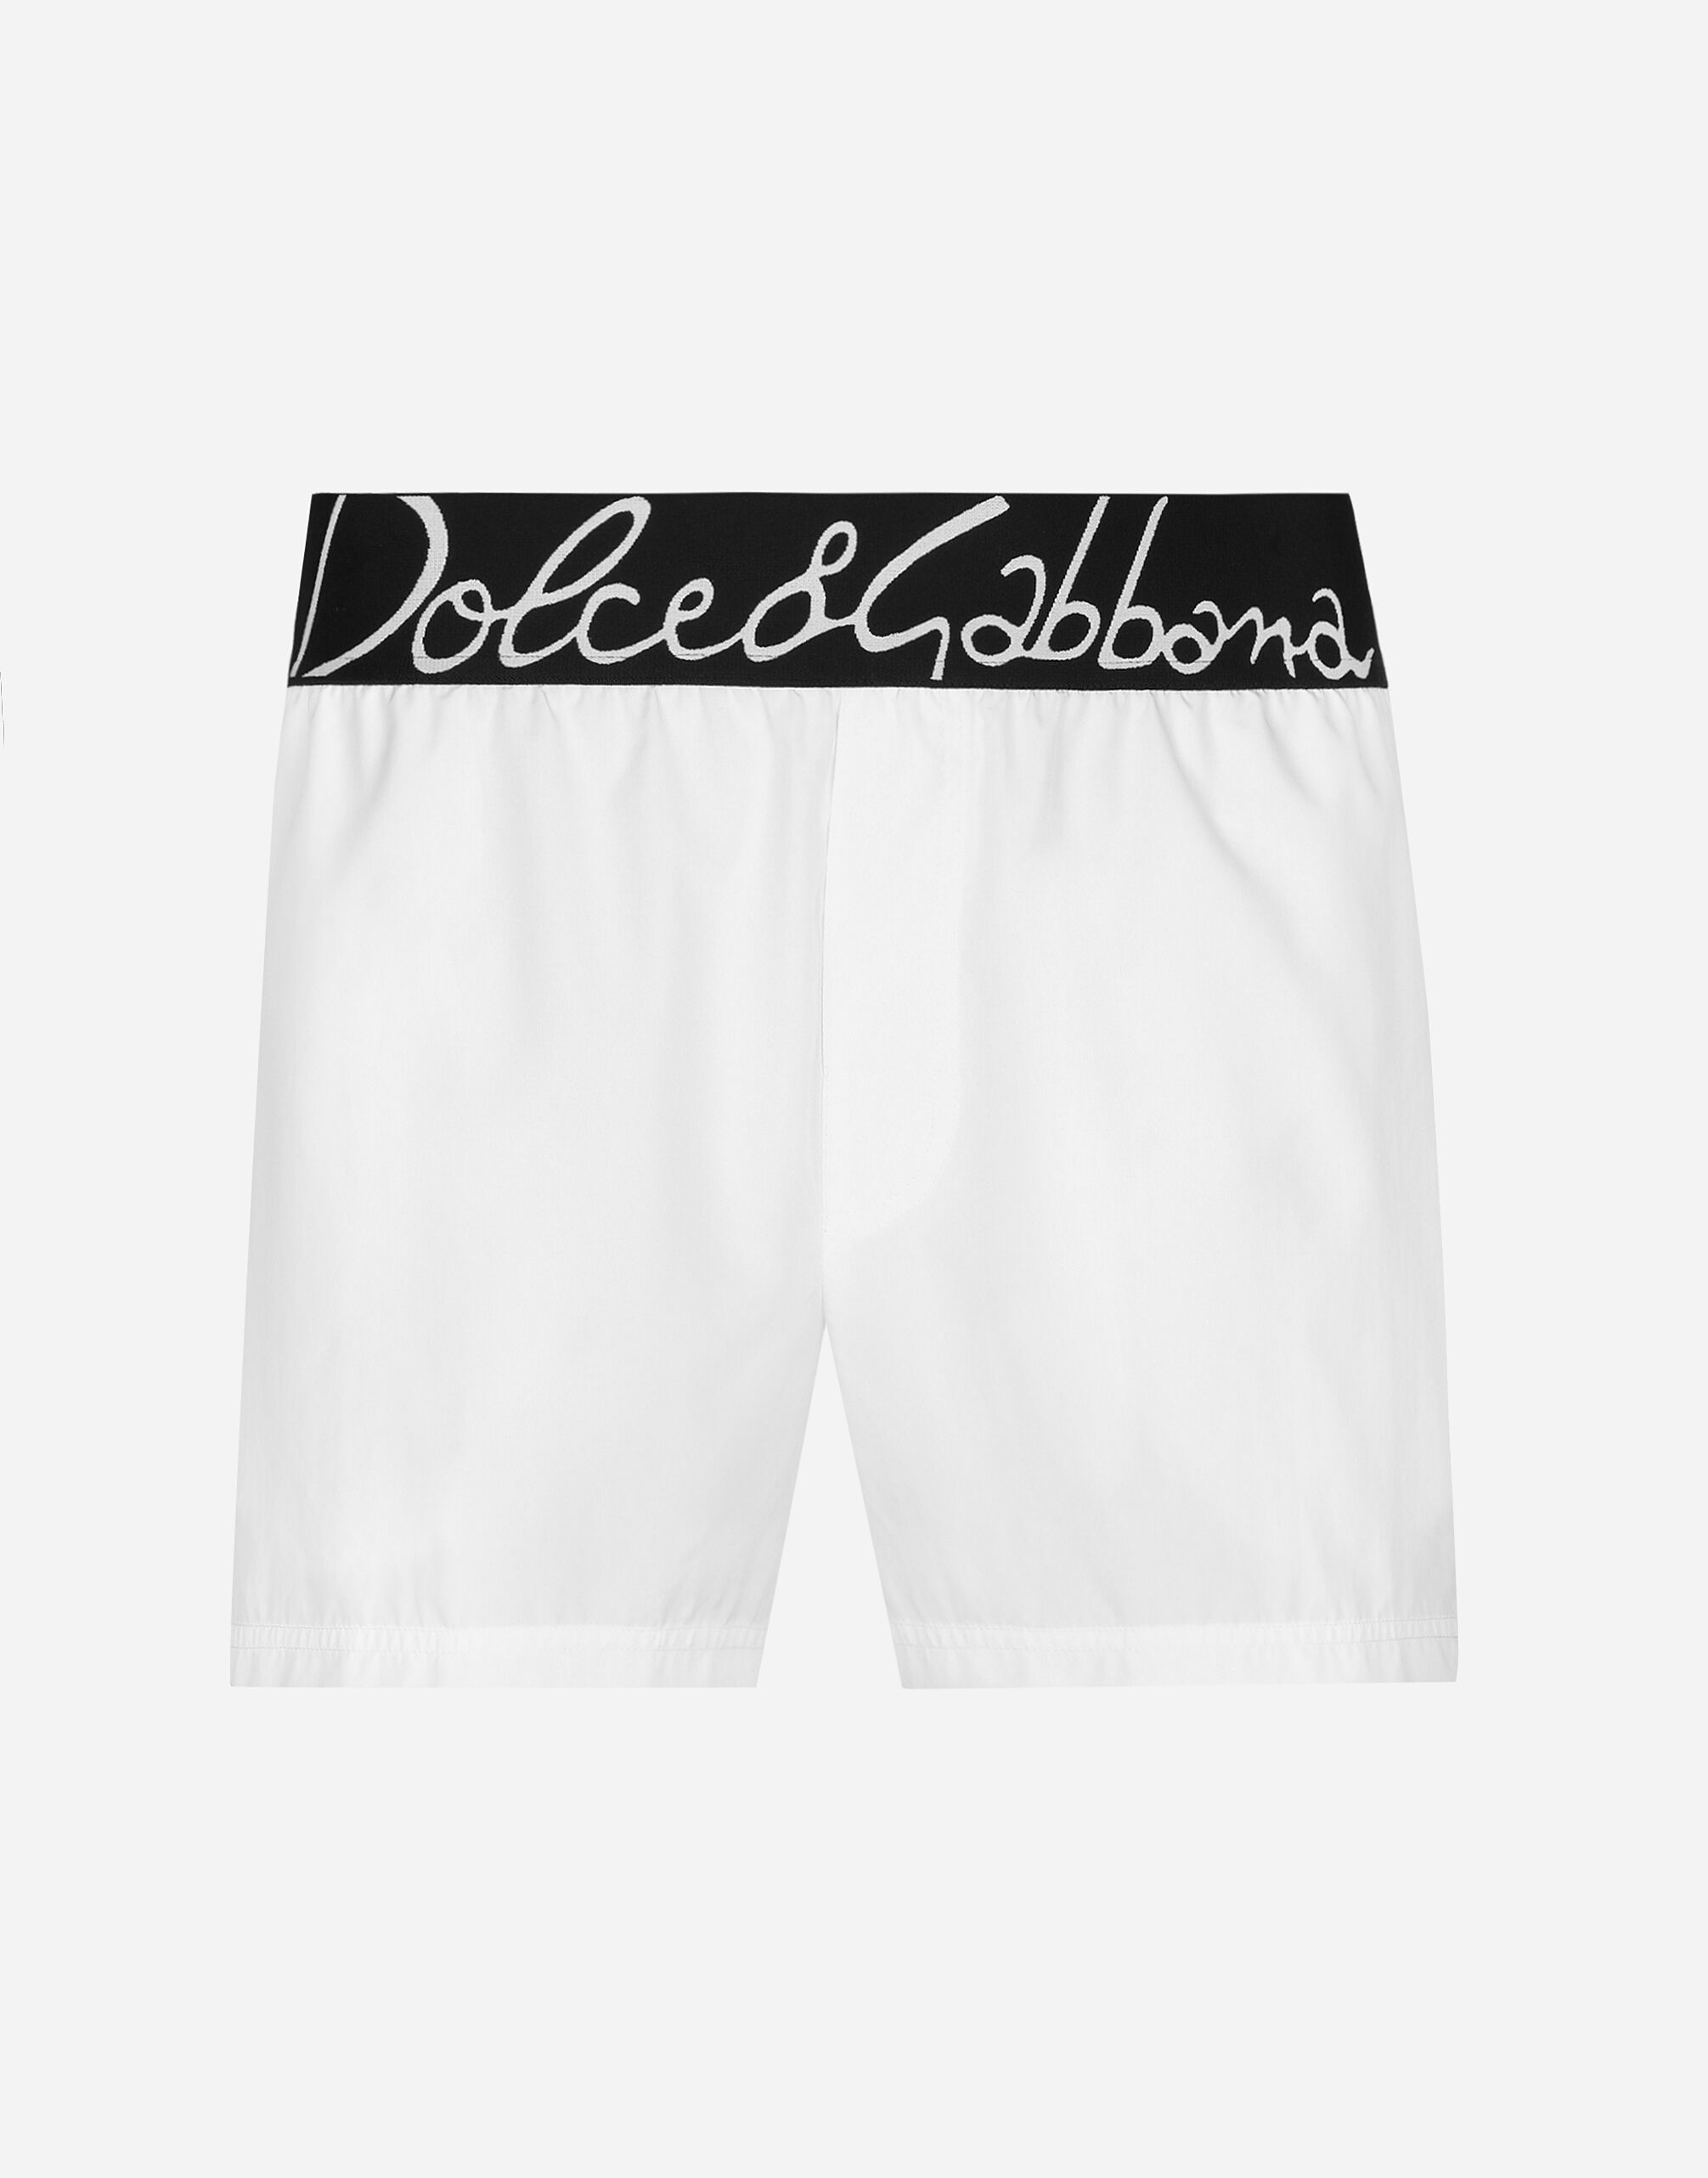 Dolce & Gabbana Short swim trunks with Dolce&Gabbana logo Print M4A13TISMF5